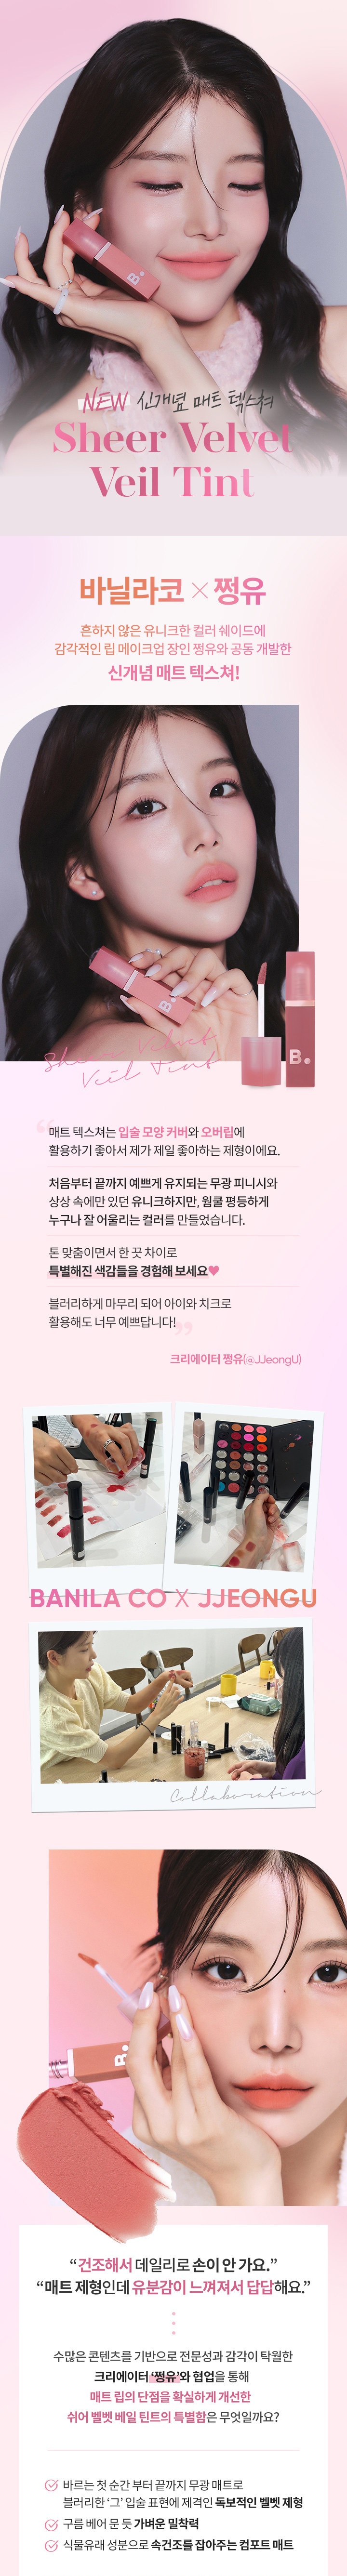 Banila Co Sheer Velvet Veil Tint korean skincare product online shop malaysia china usa1